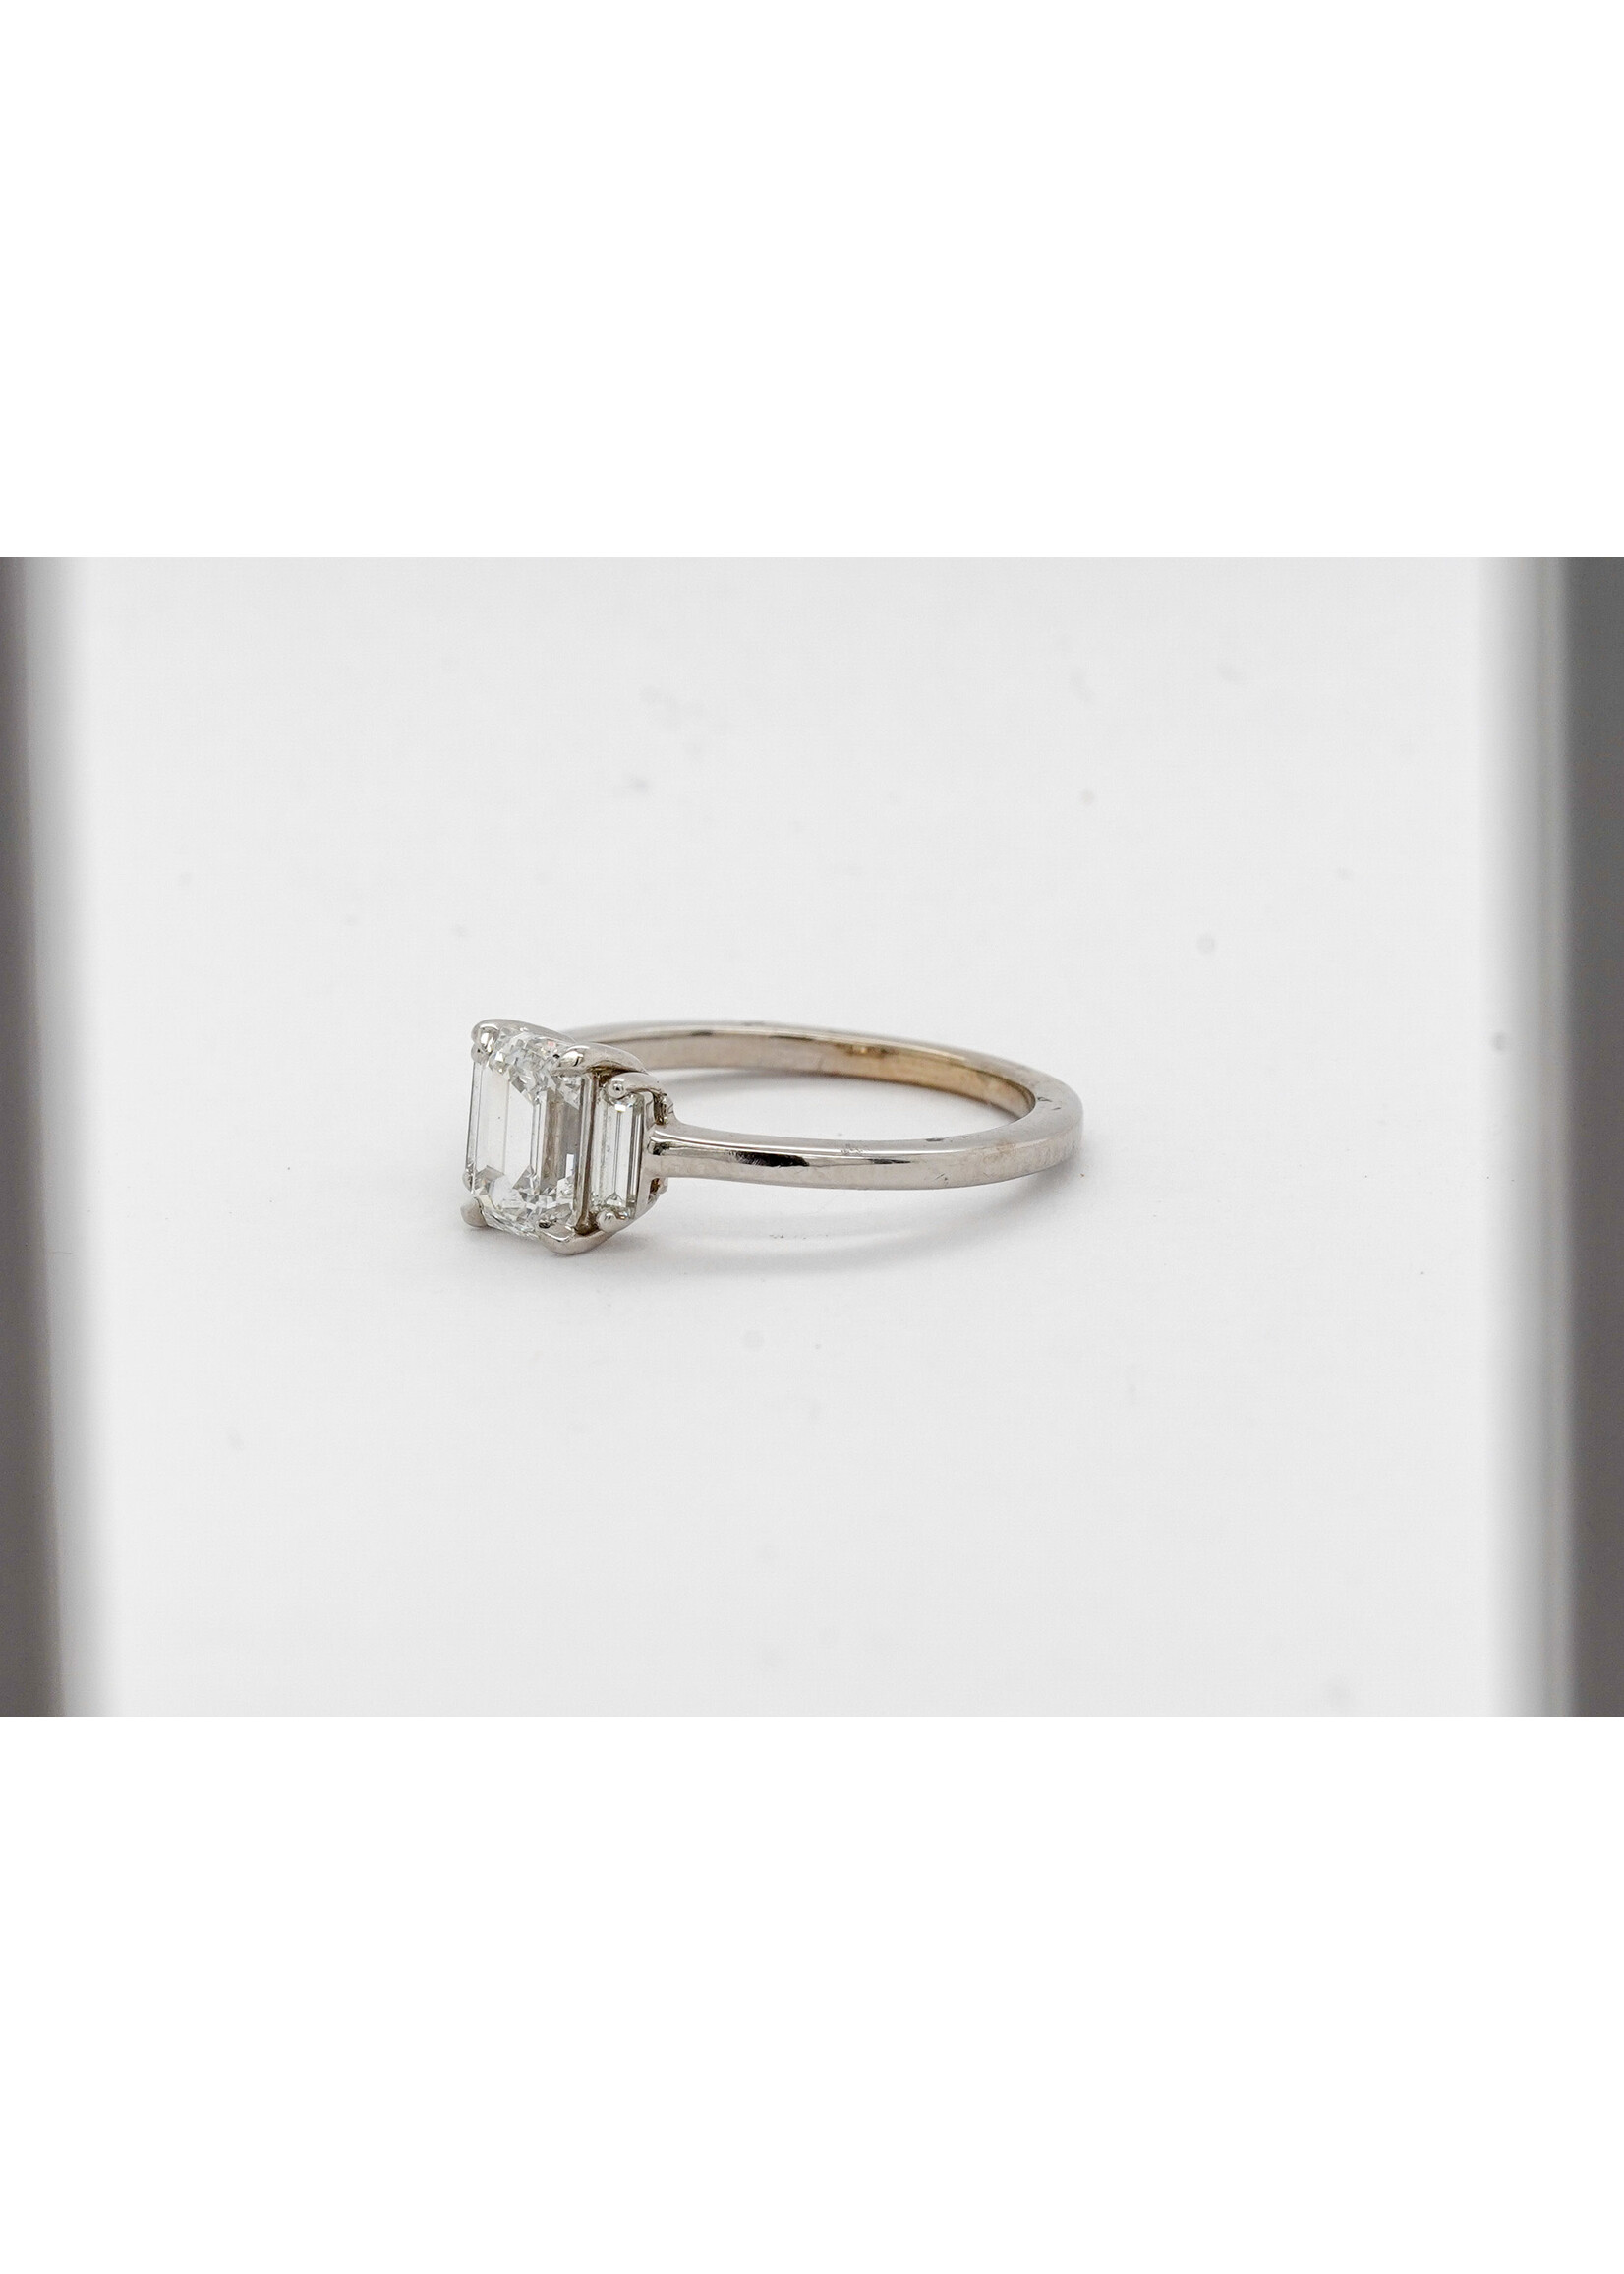 14KW 2.36g 1.20ctw (0.90ctr) Emerald Cut Diamond Engagement Ring (size 5.5)